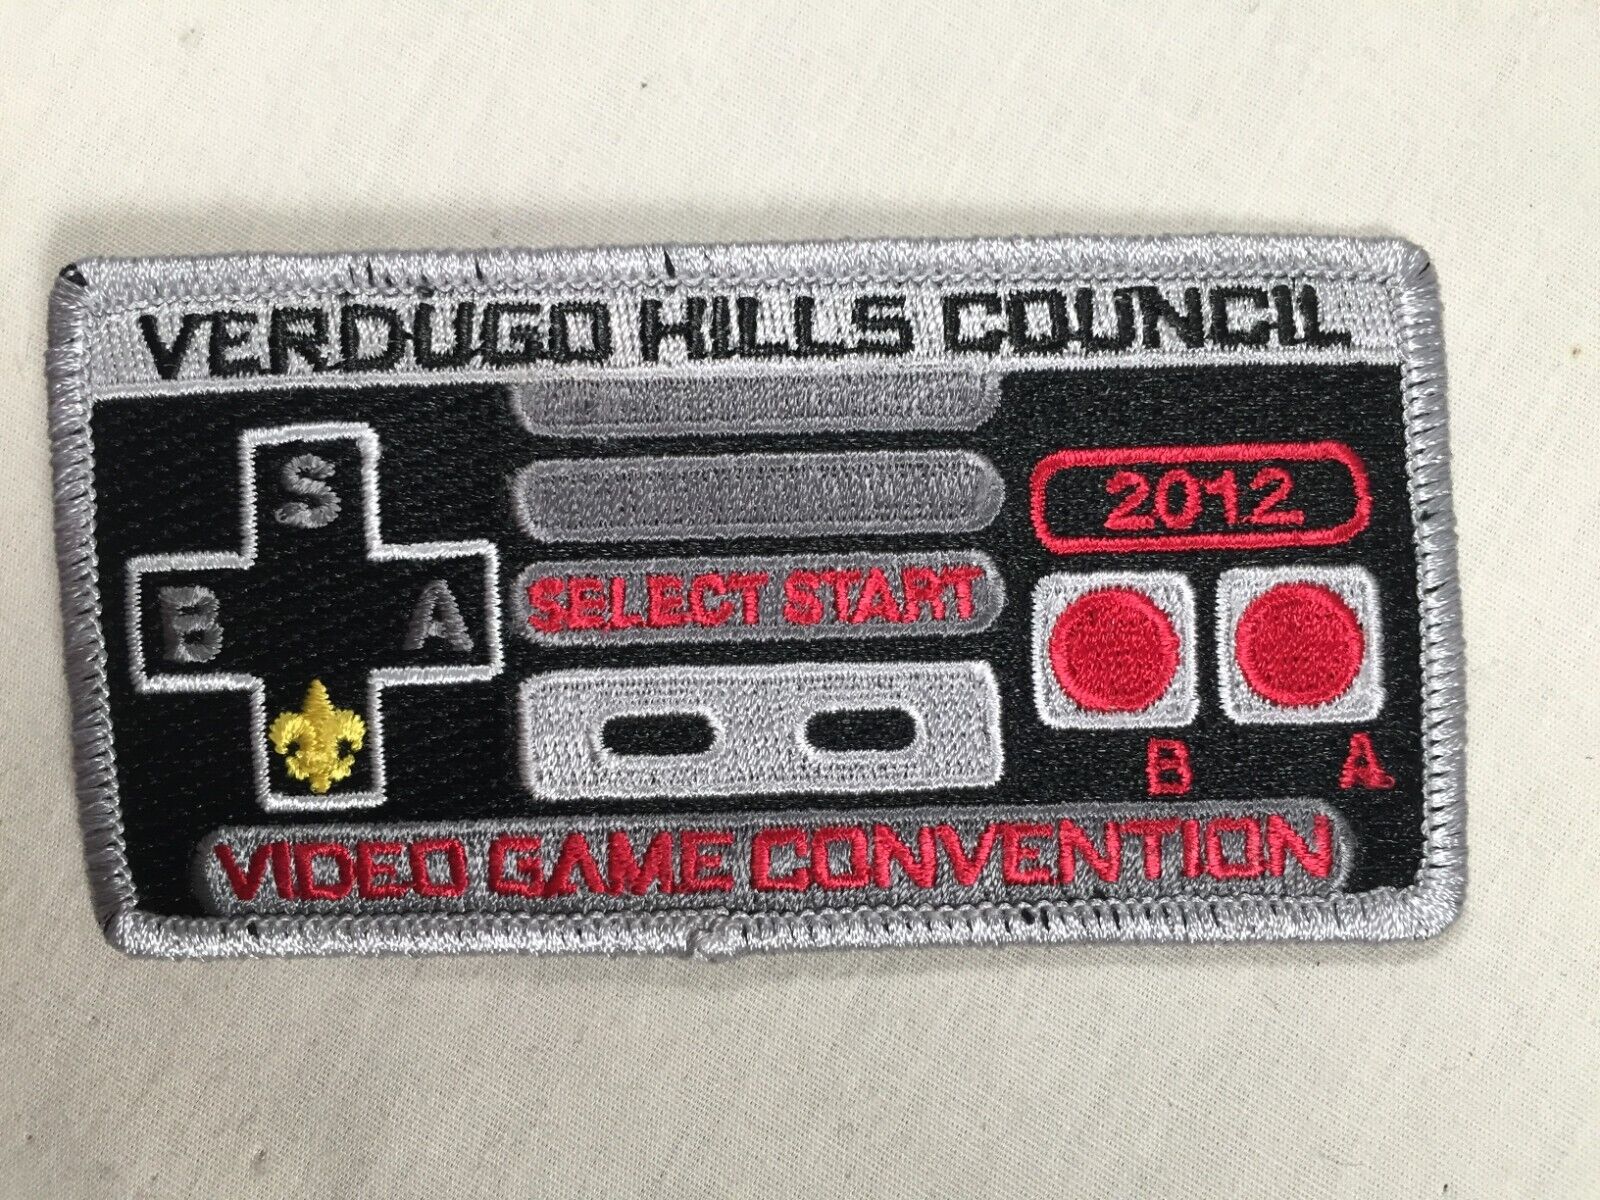 2012 Verdugo Hills Council Video Game Convention BSA Activity Patch